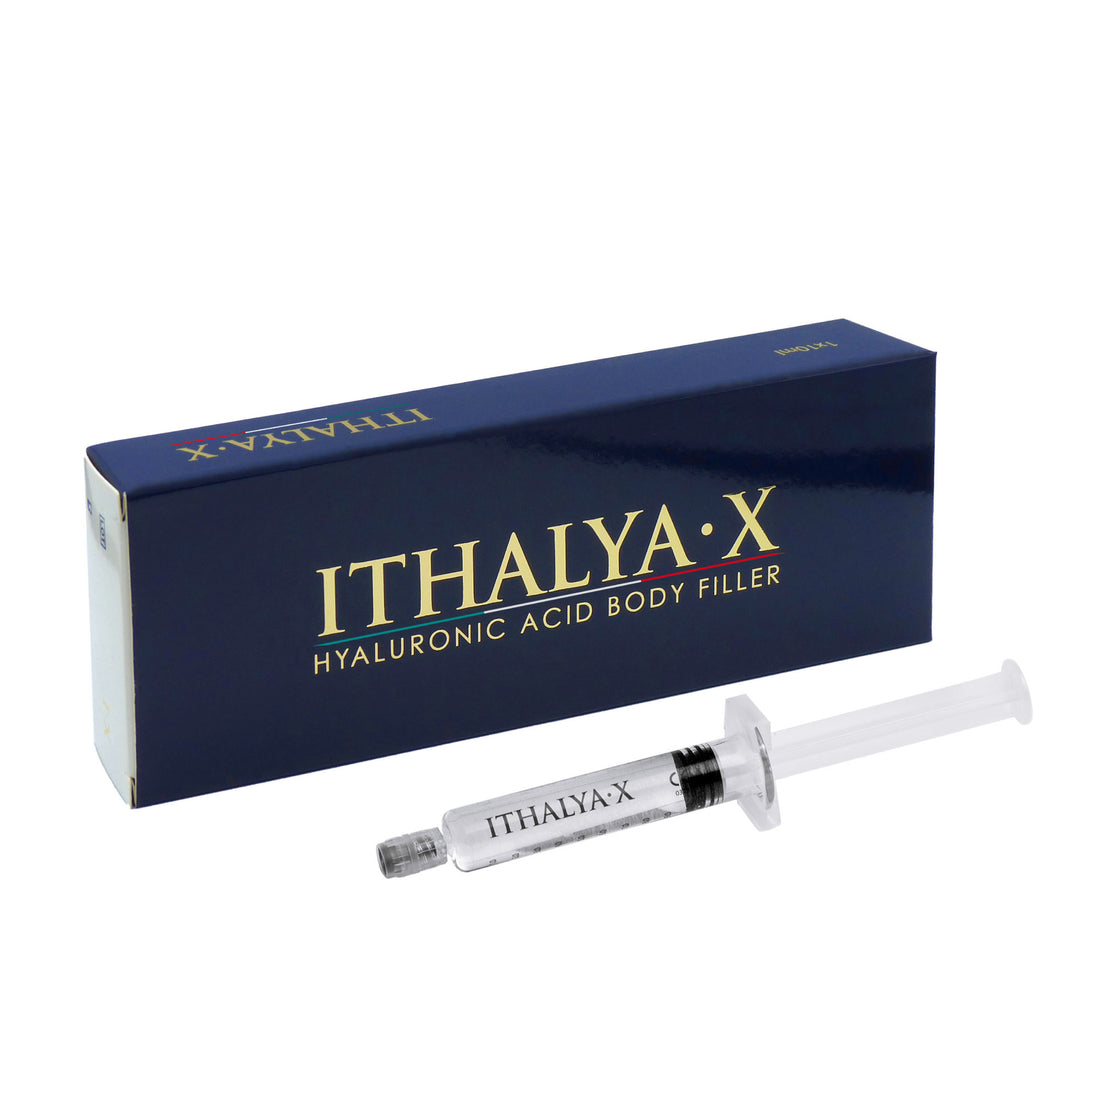 ITHALYA X - Macromolecular Hyaluronic Acid Body Filler